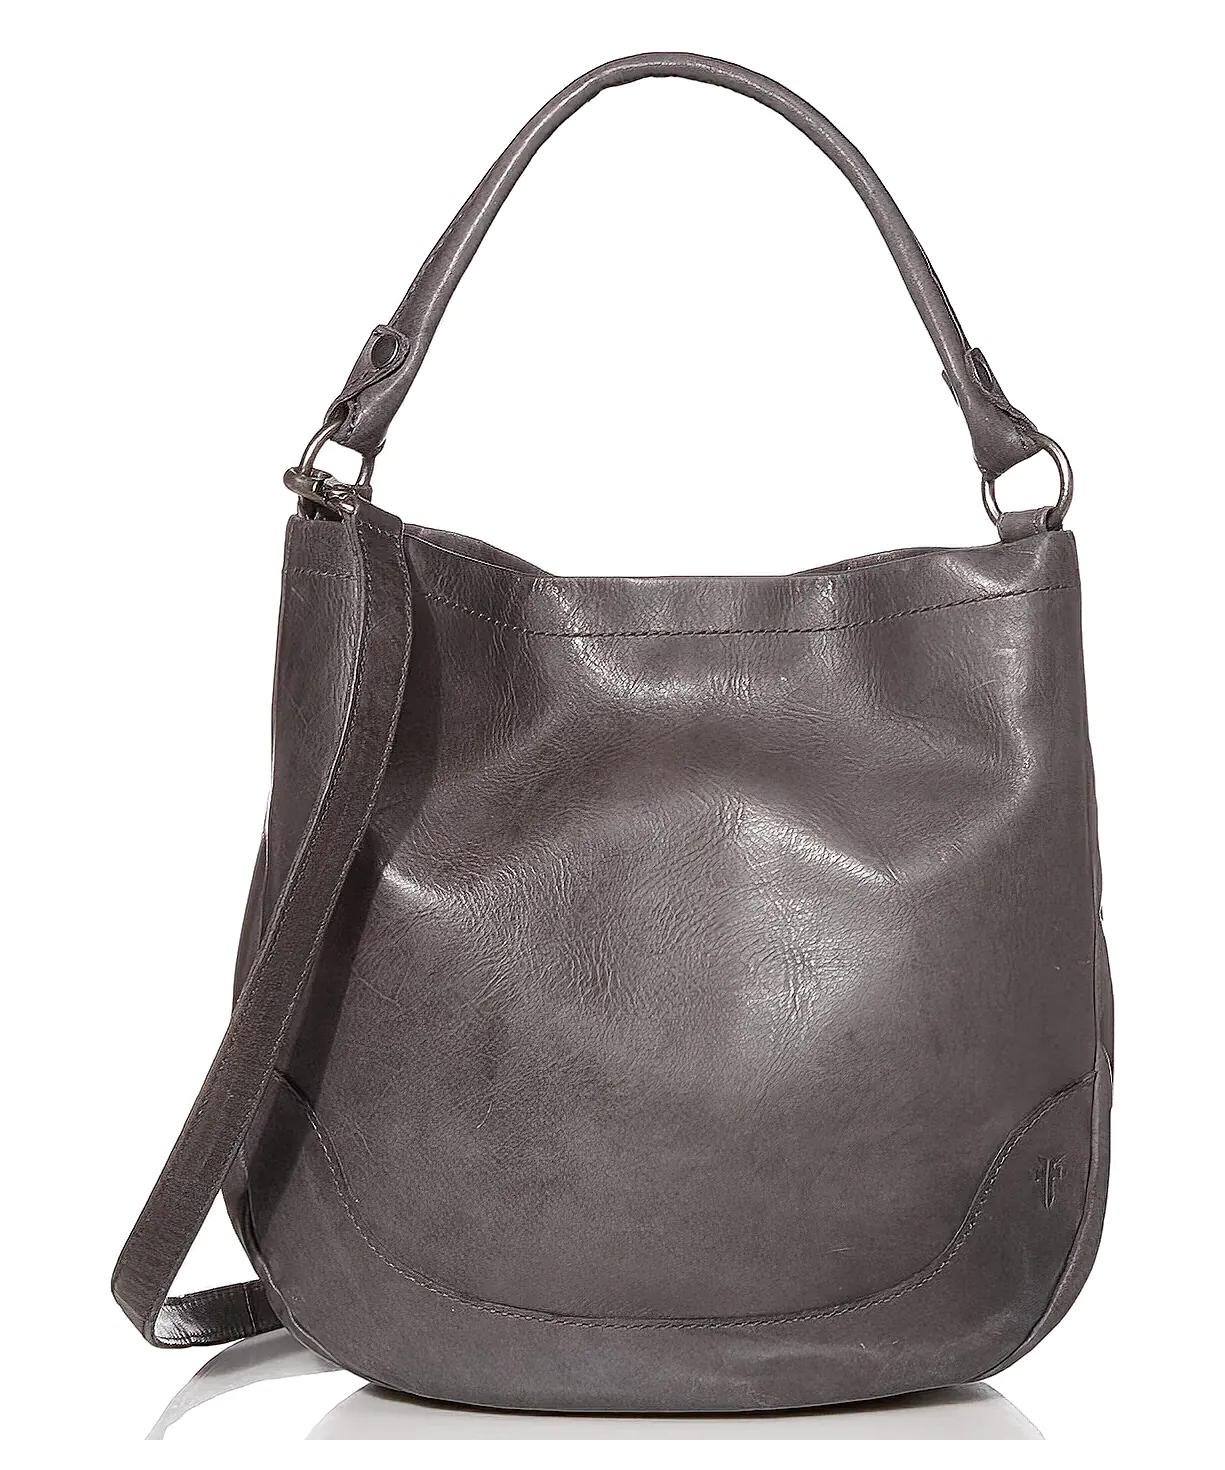 A stylish grey leather hobo bag